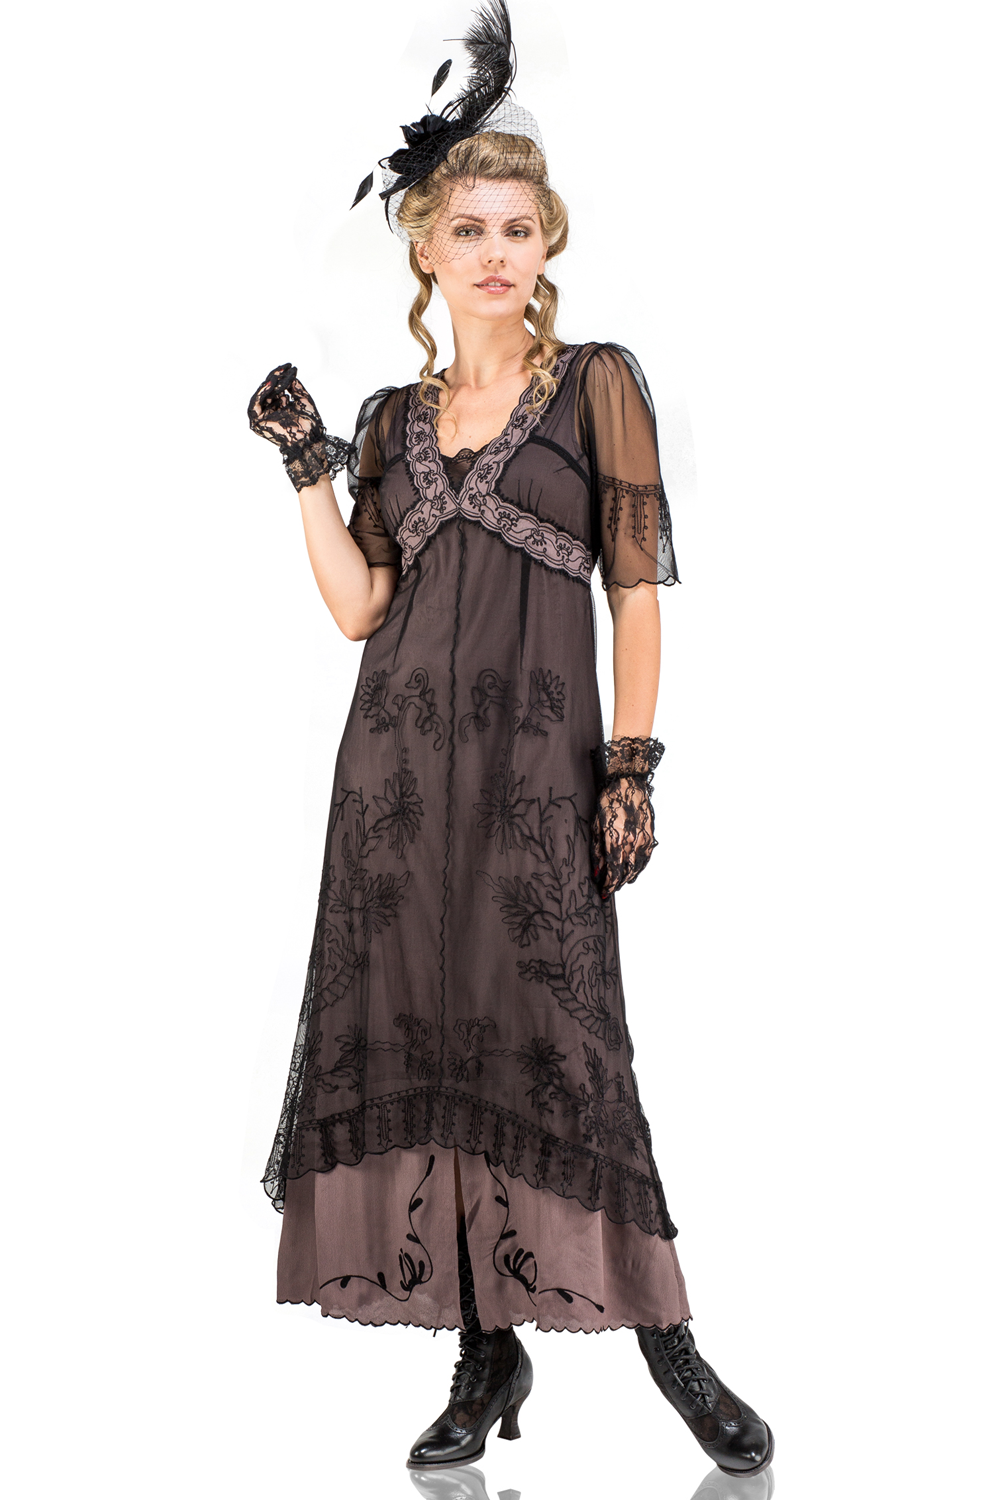 Buy Boardwalk Empire Inspired Dresses New Vintage Titanic Tea Party Dress in Black-Coco by Nataya $249.00 AT vintagedancer.com